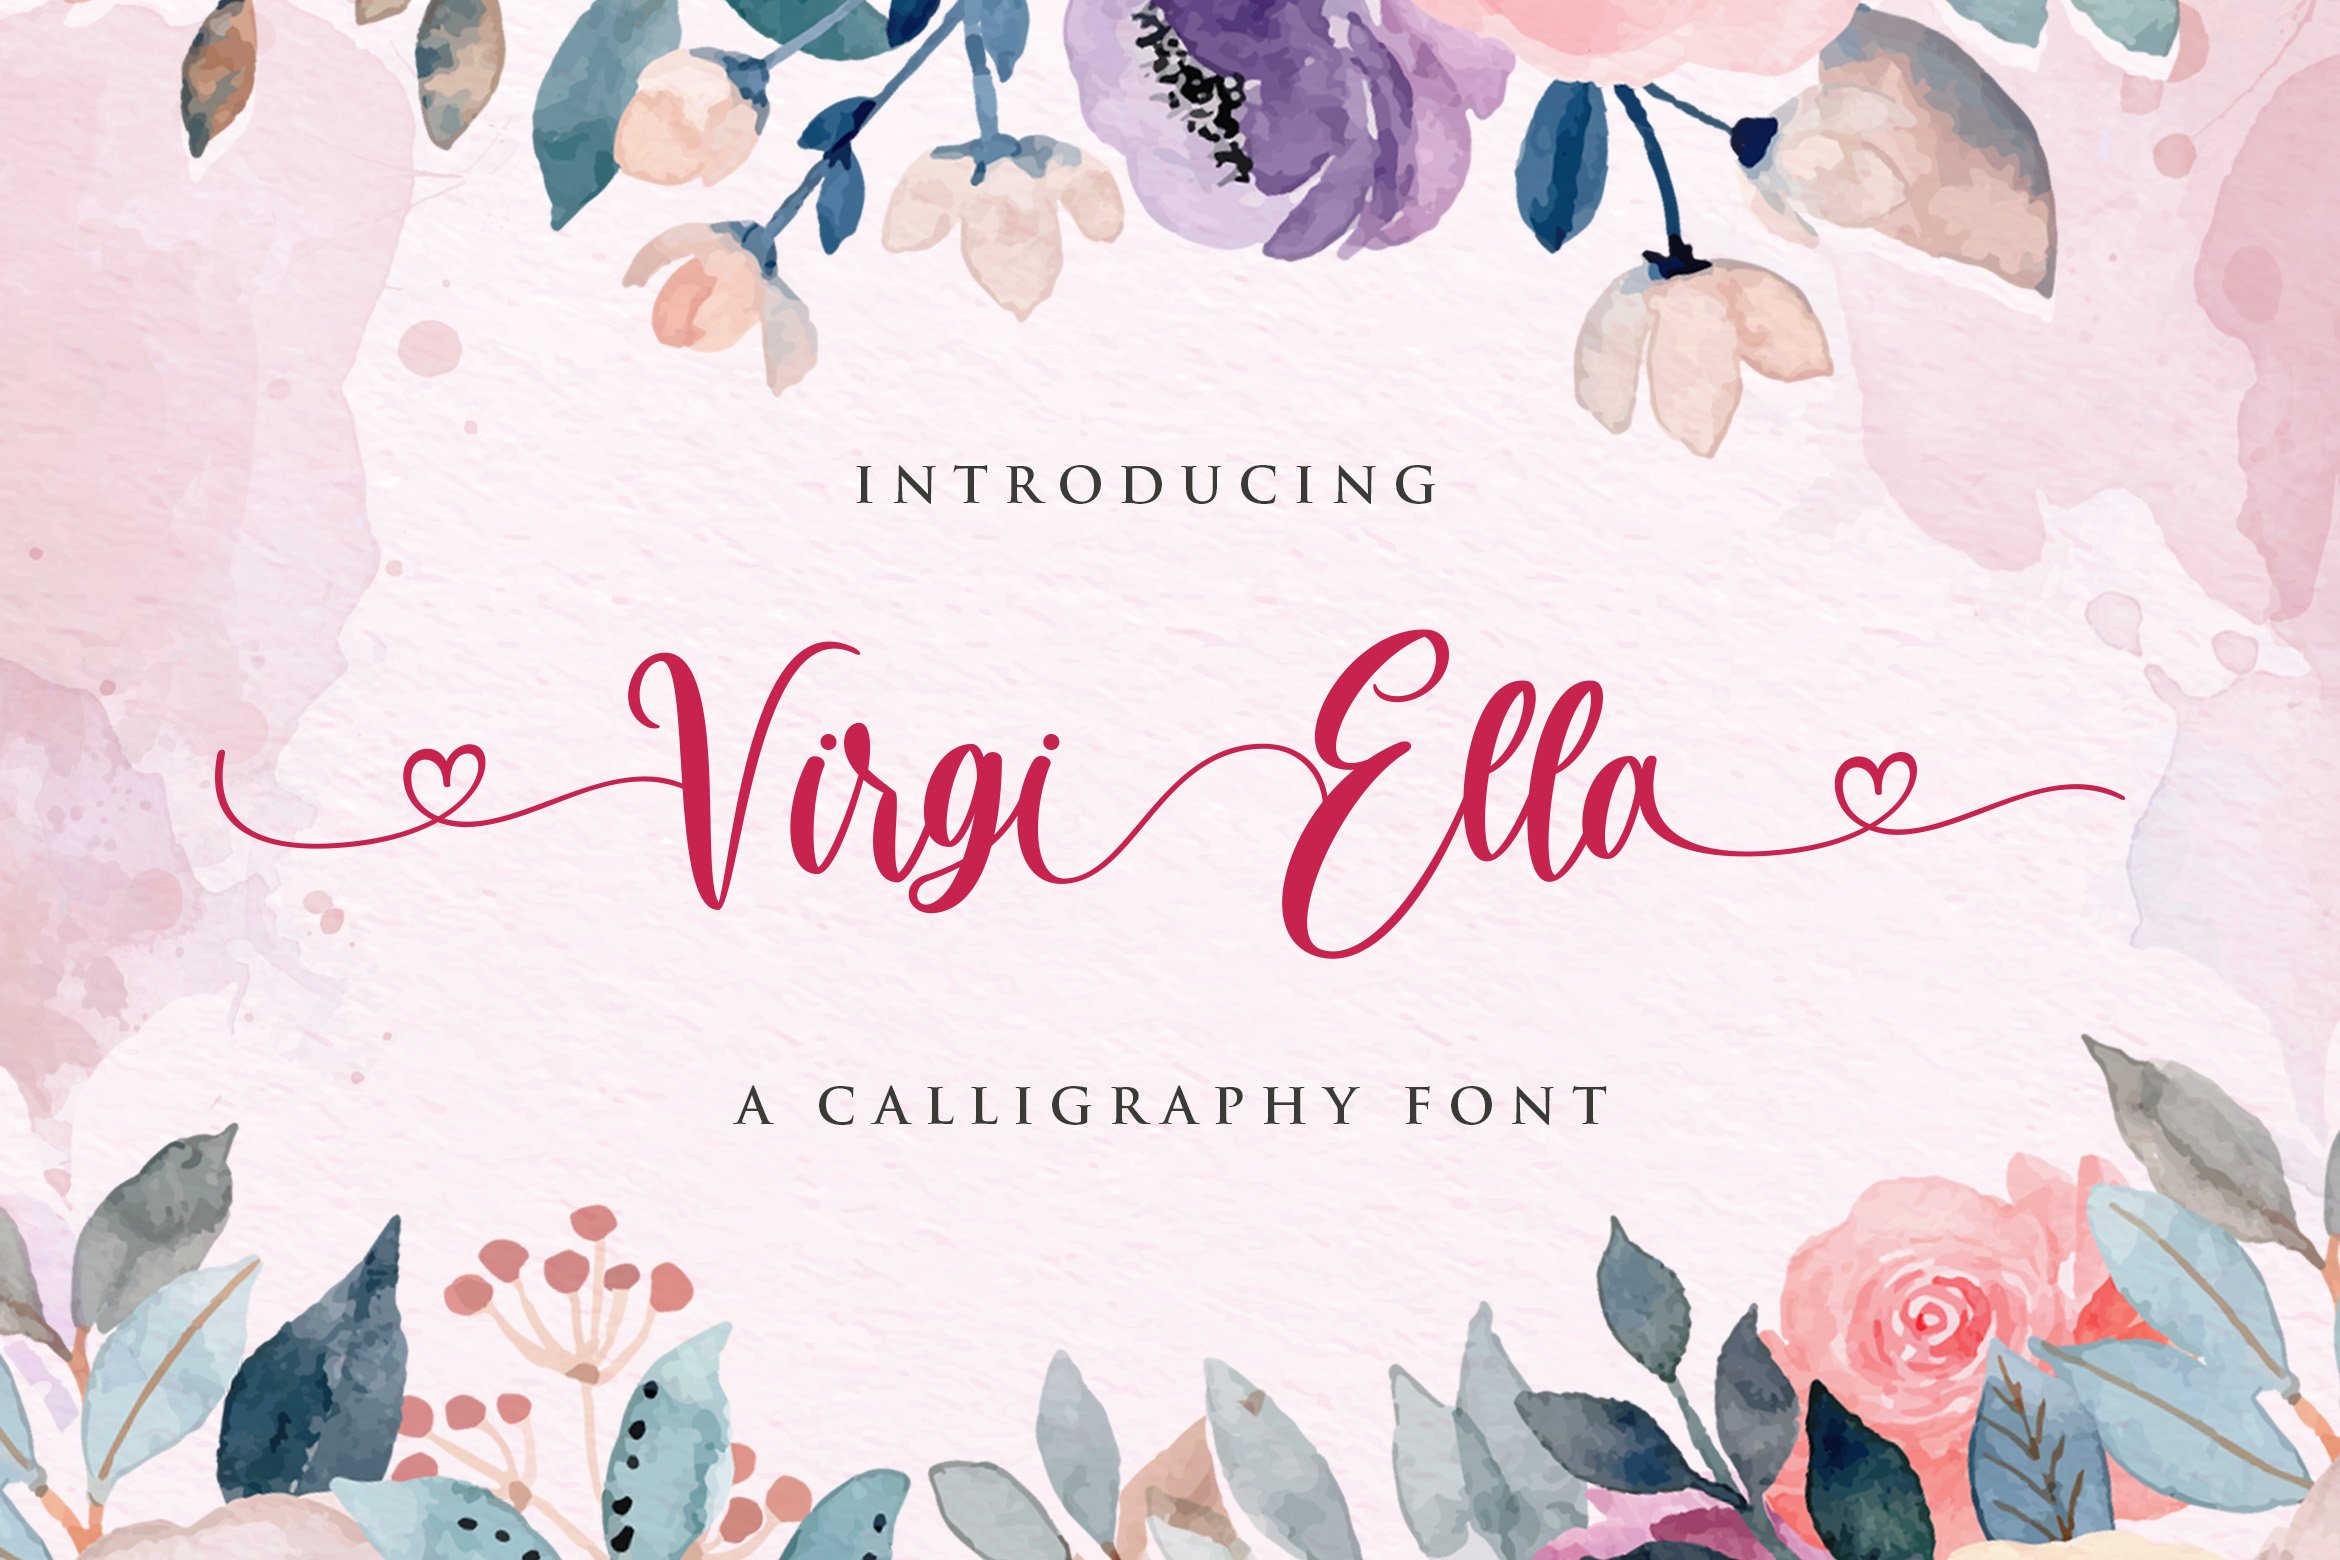 Virgi Ella - Lovely Calligraphy Font cover image.